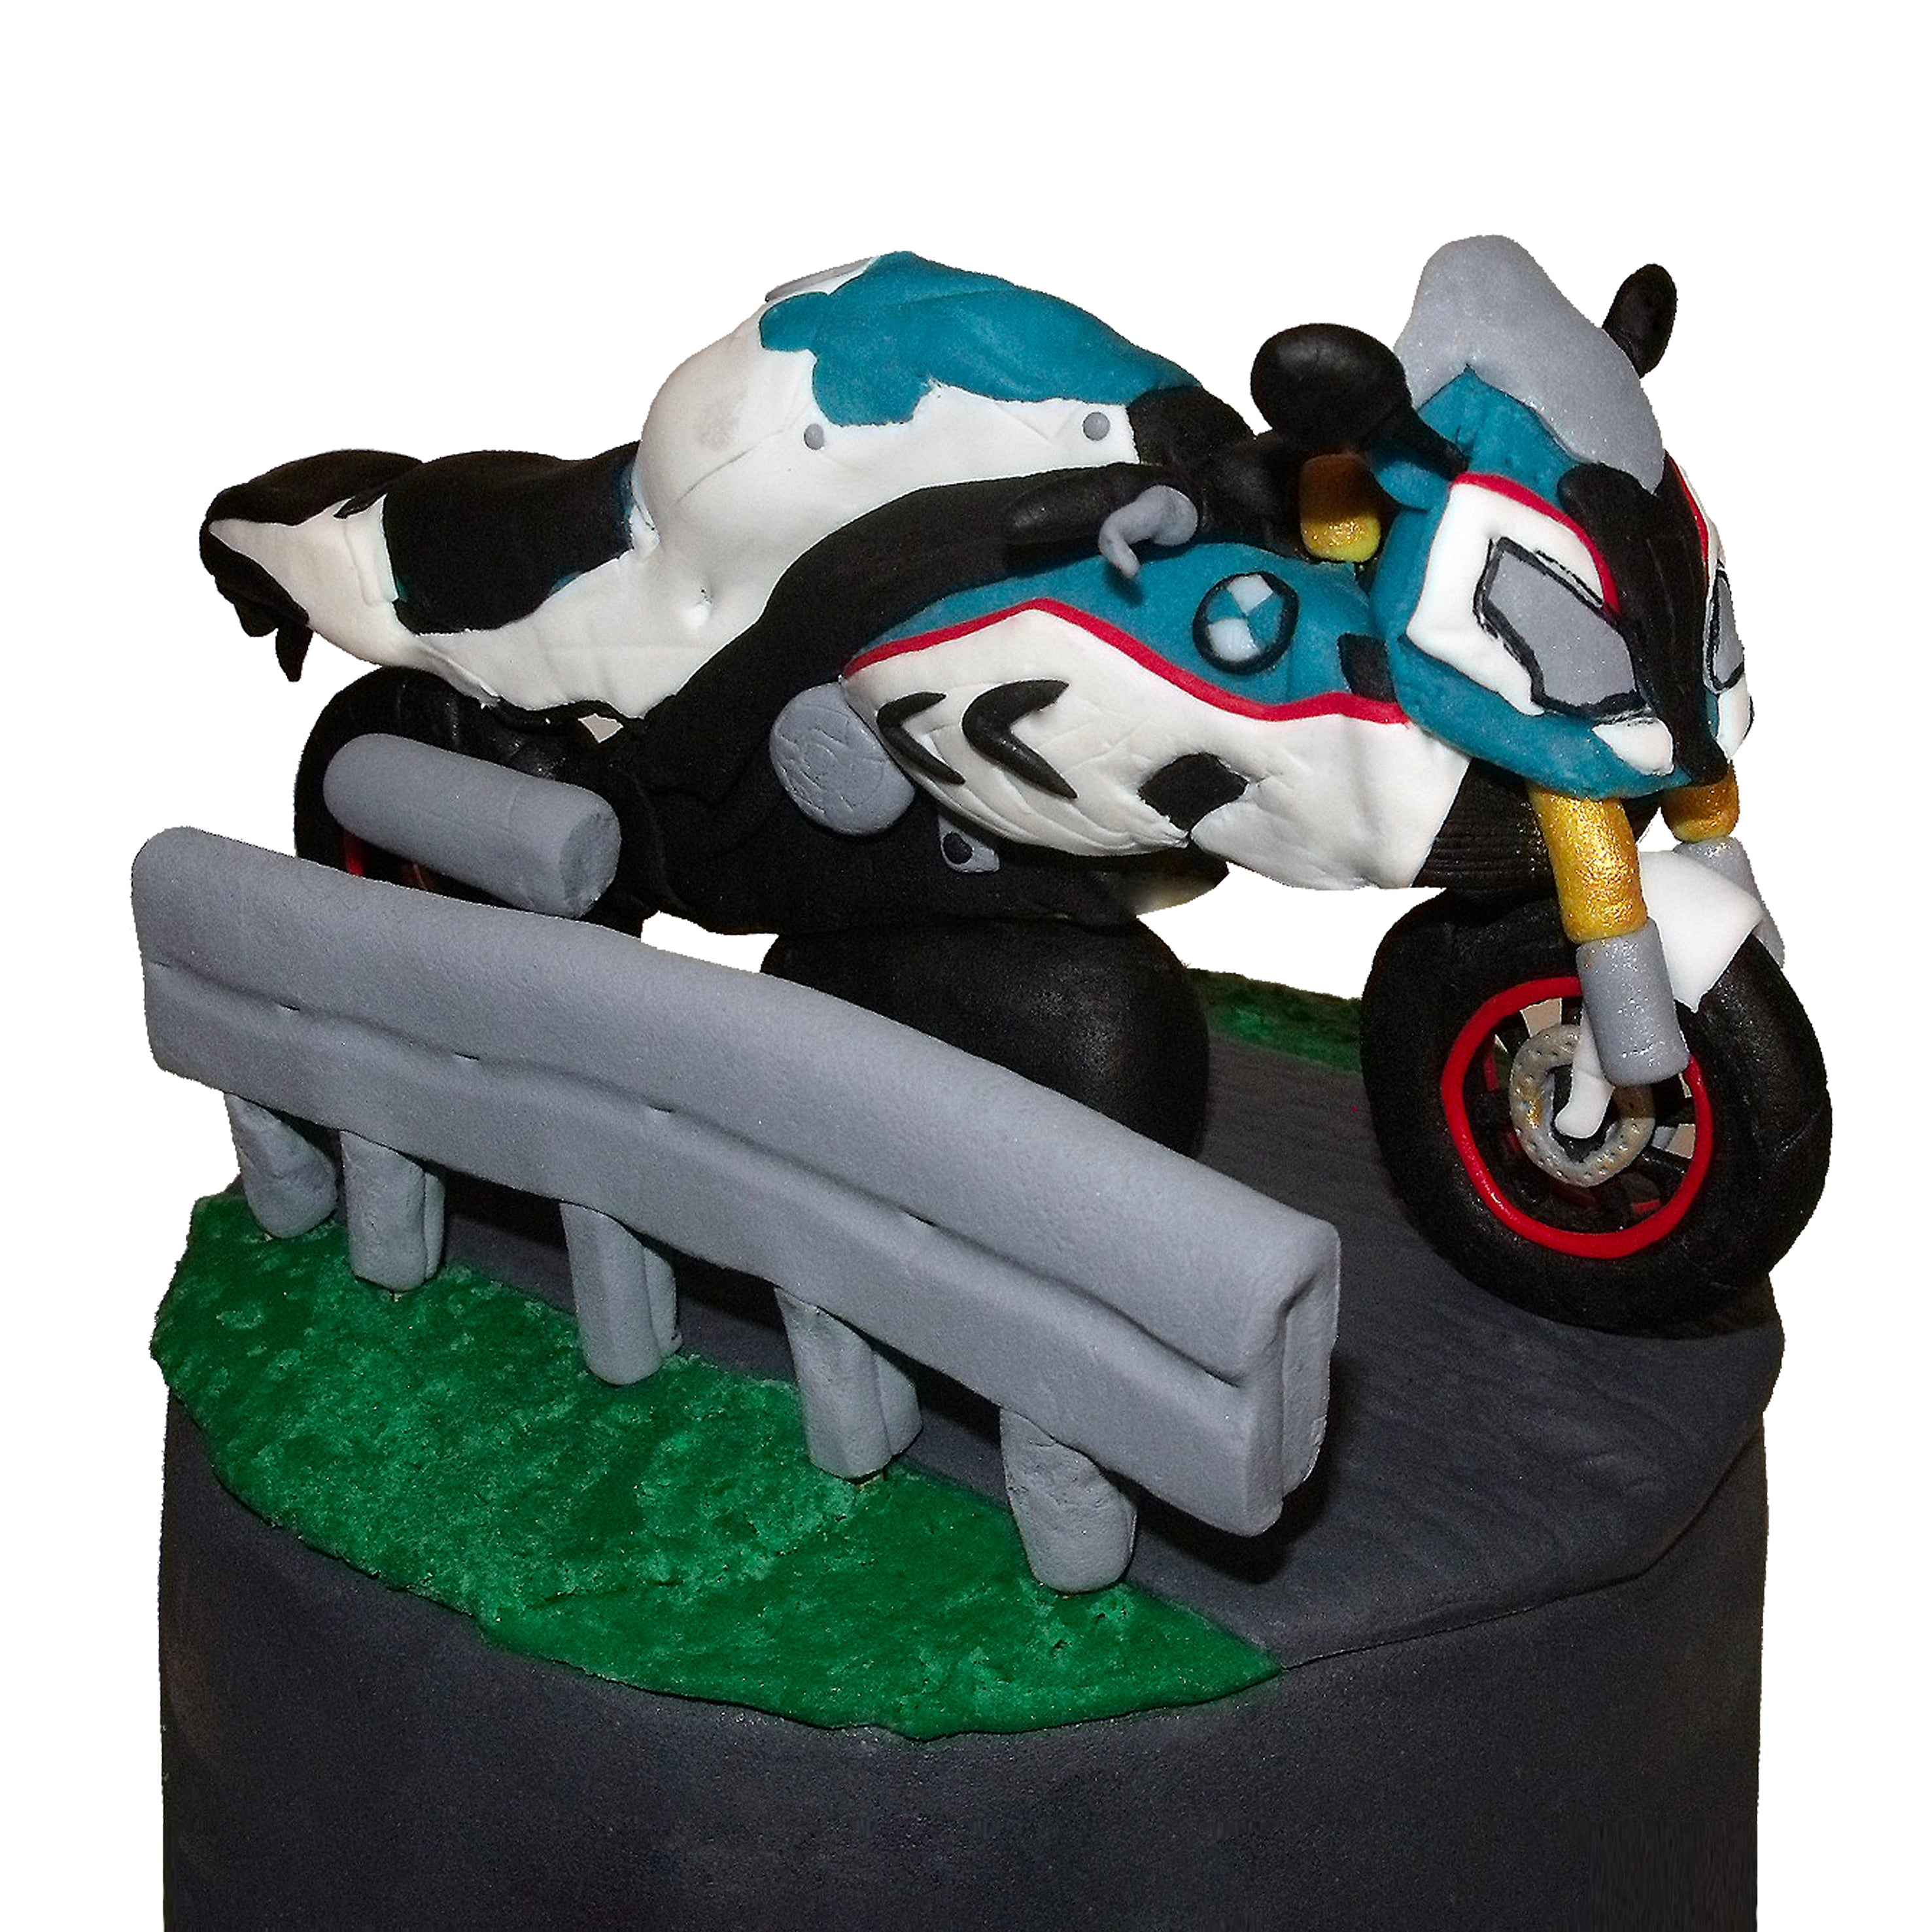 Honda motorbike cake with... - Sweet Sensations Cakes | Facebook